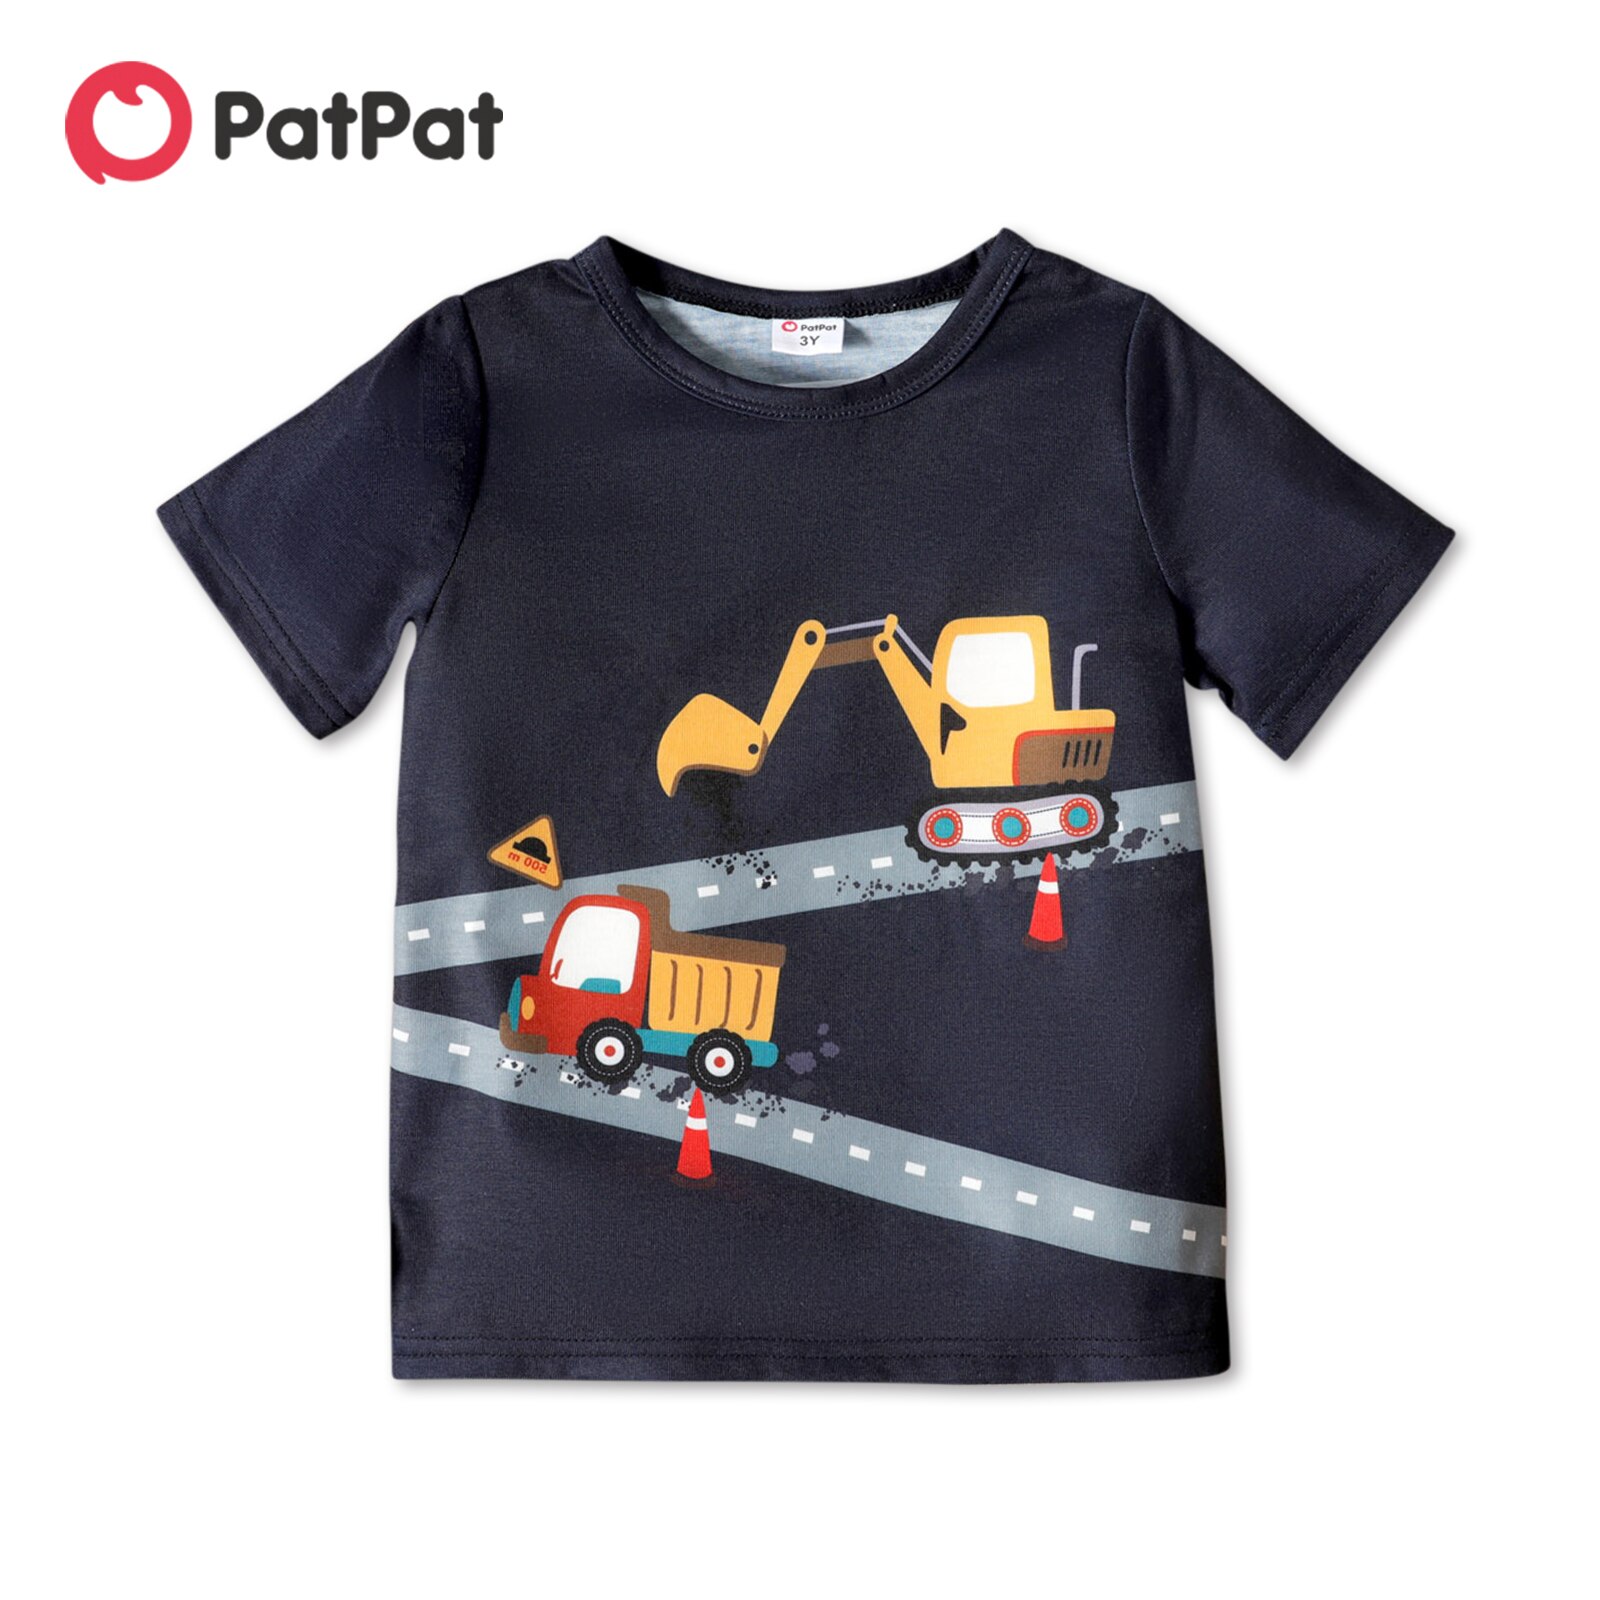 PatPat Toddler Boy T-shirt corta stampa veicolo T-shirt manica corta T-shirt bambino blu scuro Top per abbigliamento estivo per bambini